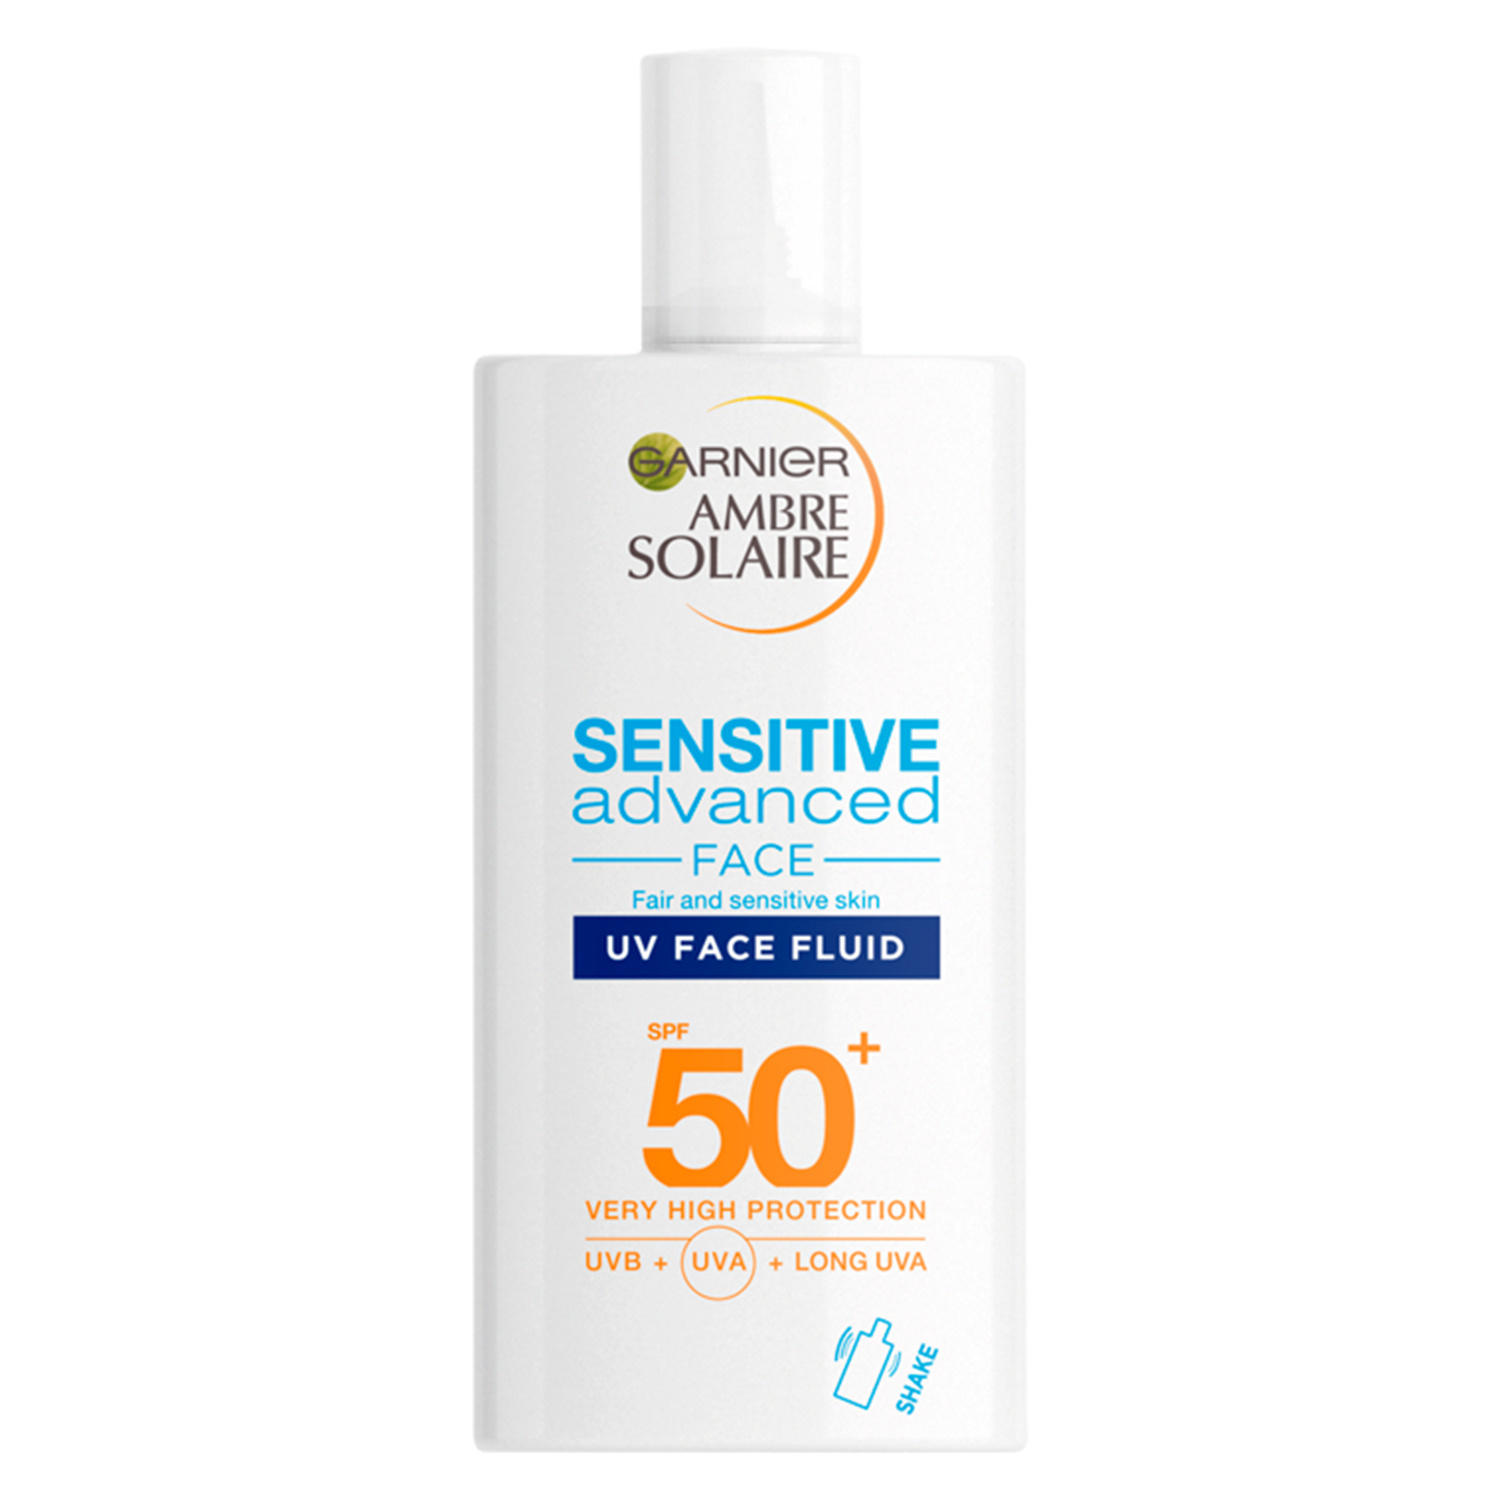 Garnier Ambre Solaire Sensitive Advanced UV Face Fluid SPF50+